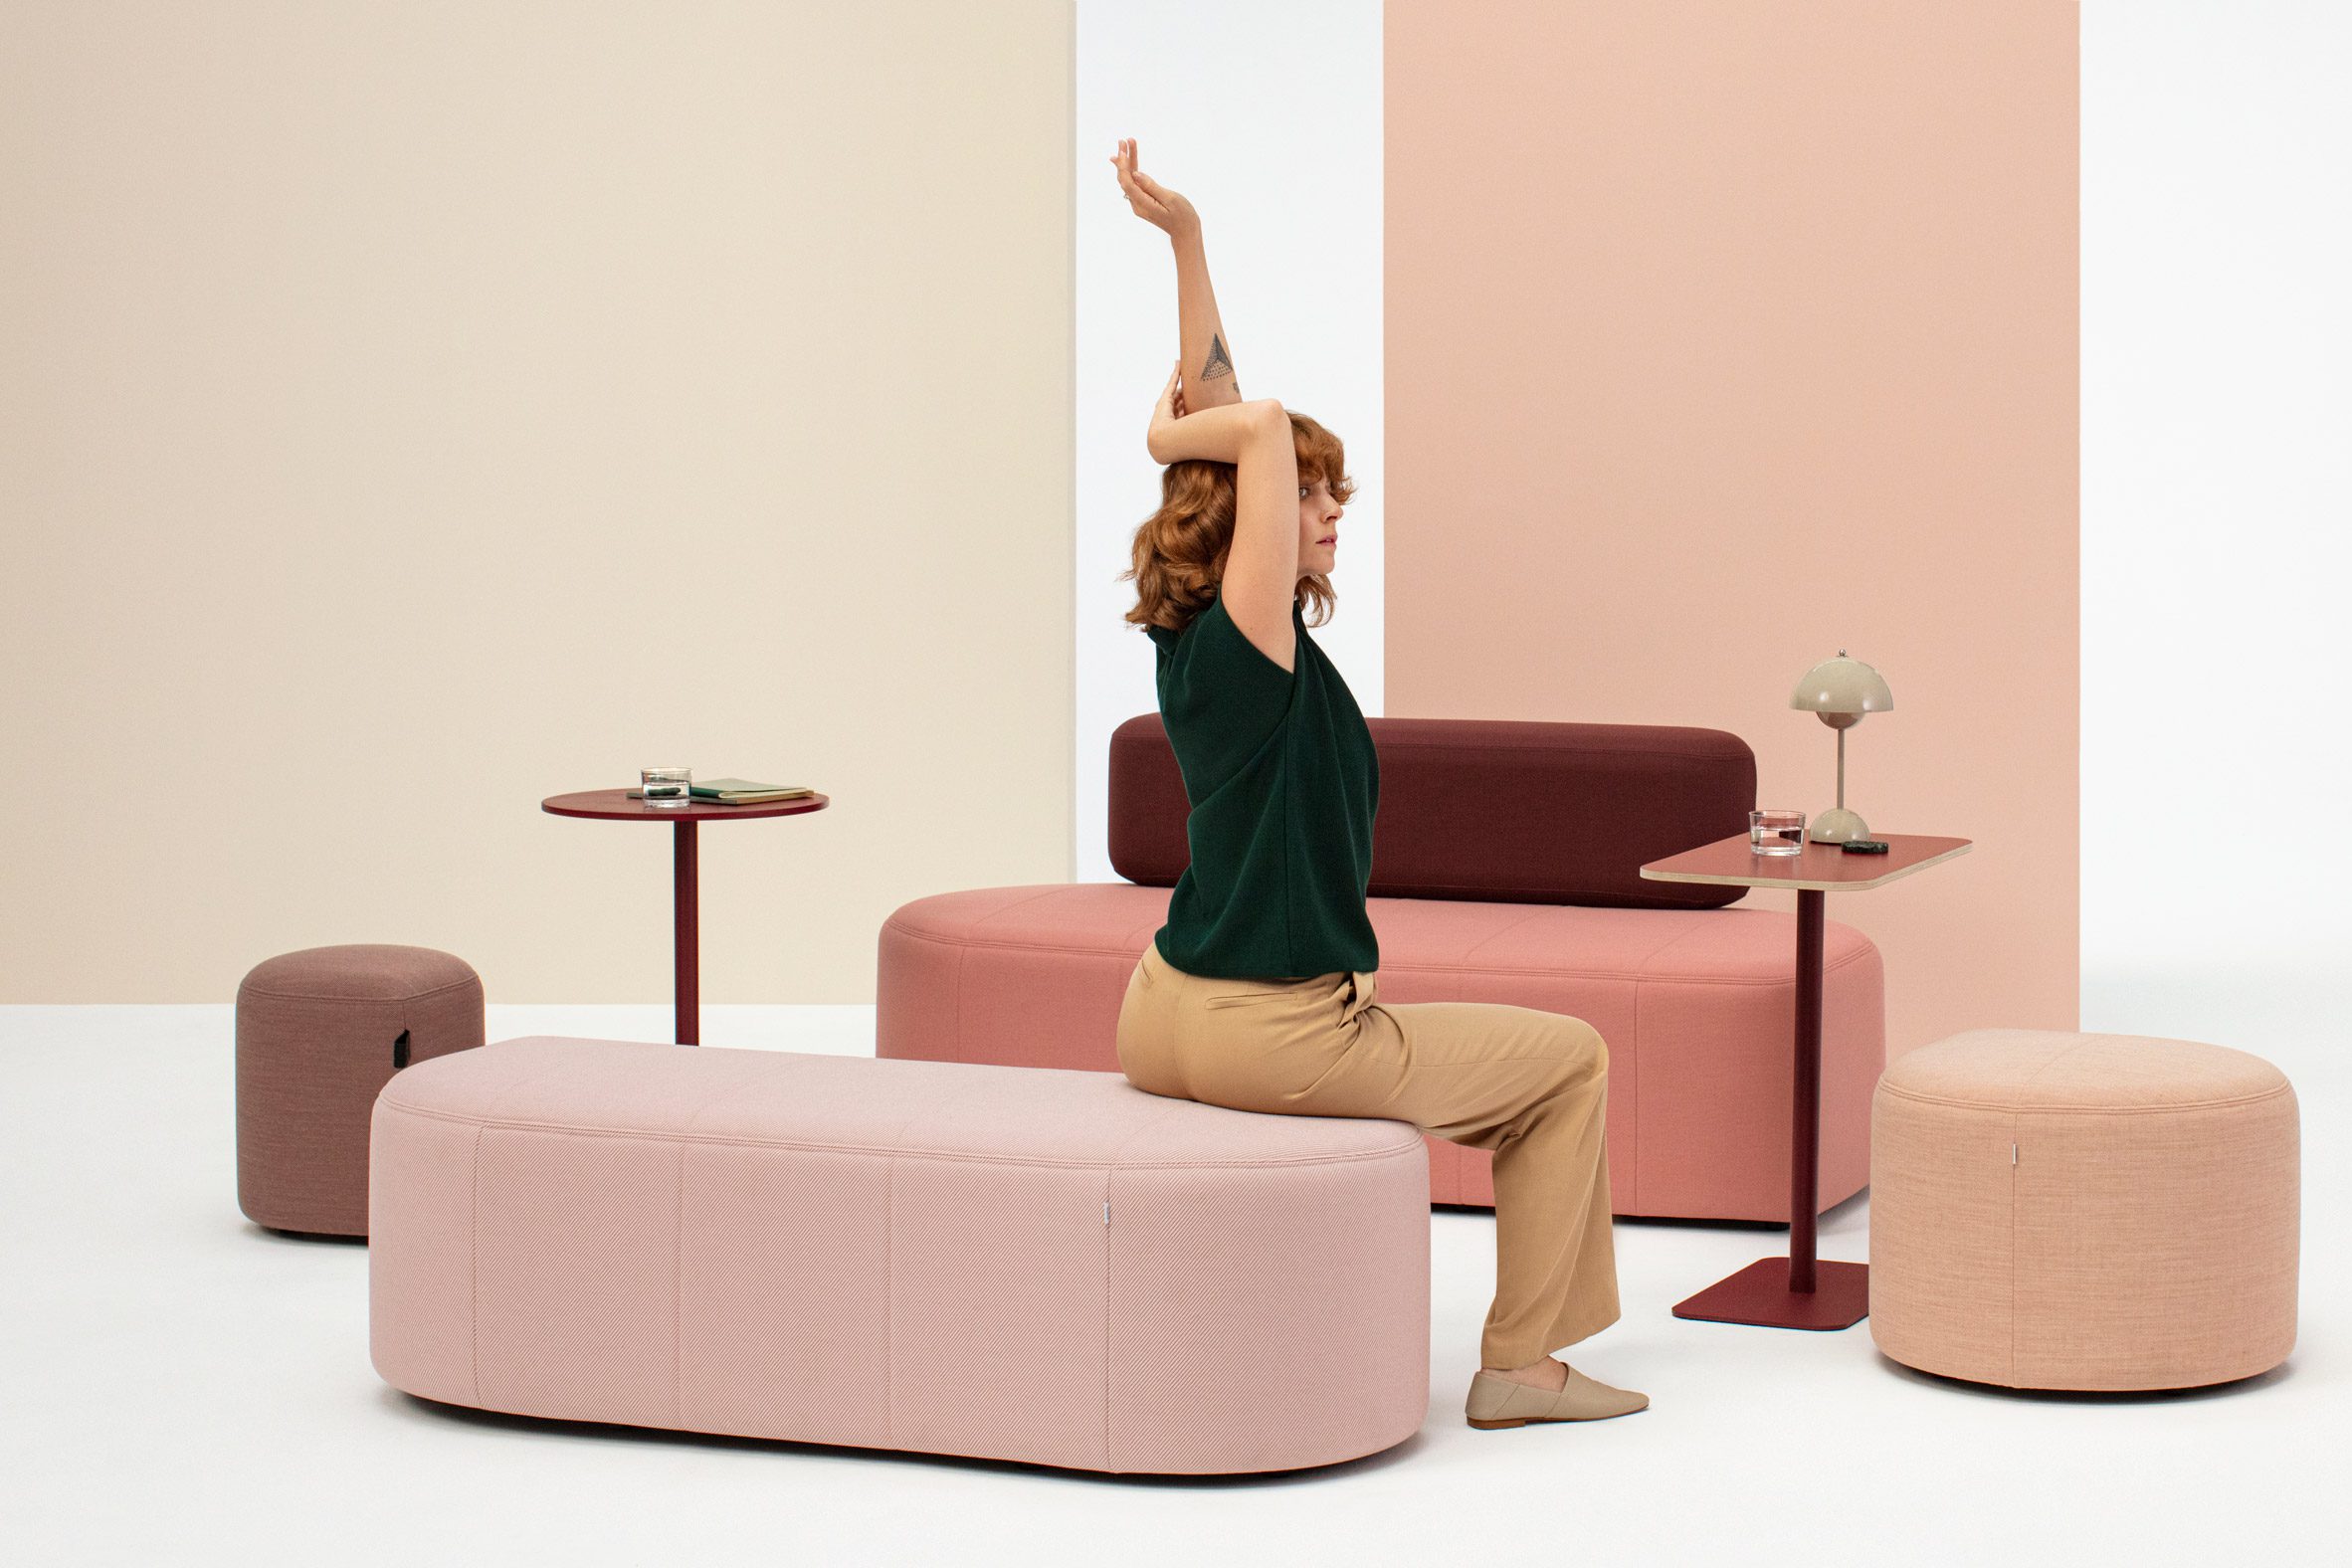 Revo workplace seating by Pearson Lloyd for Profim